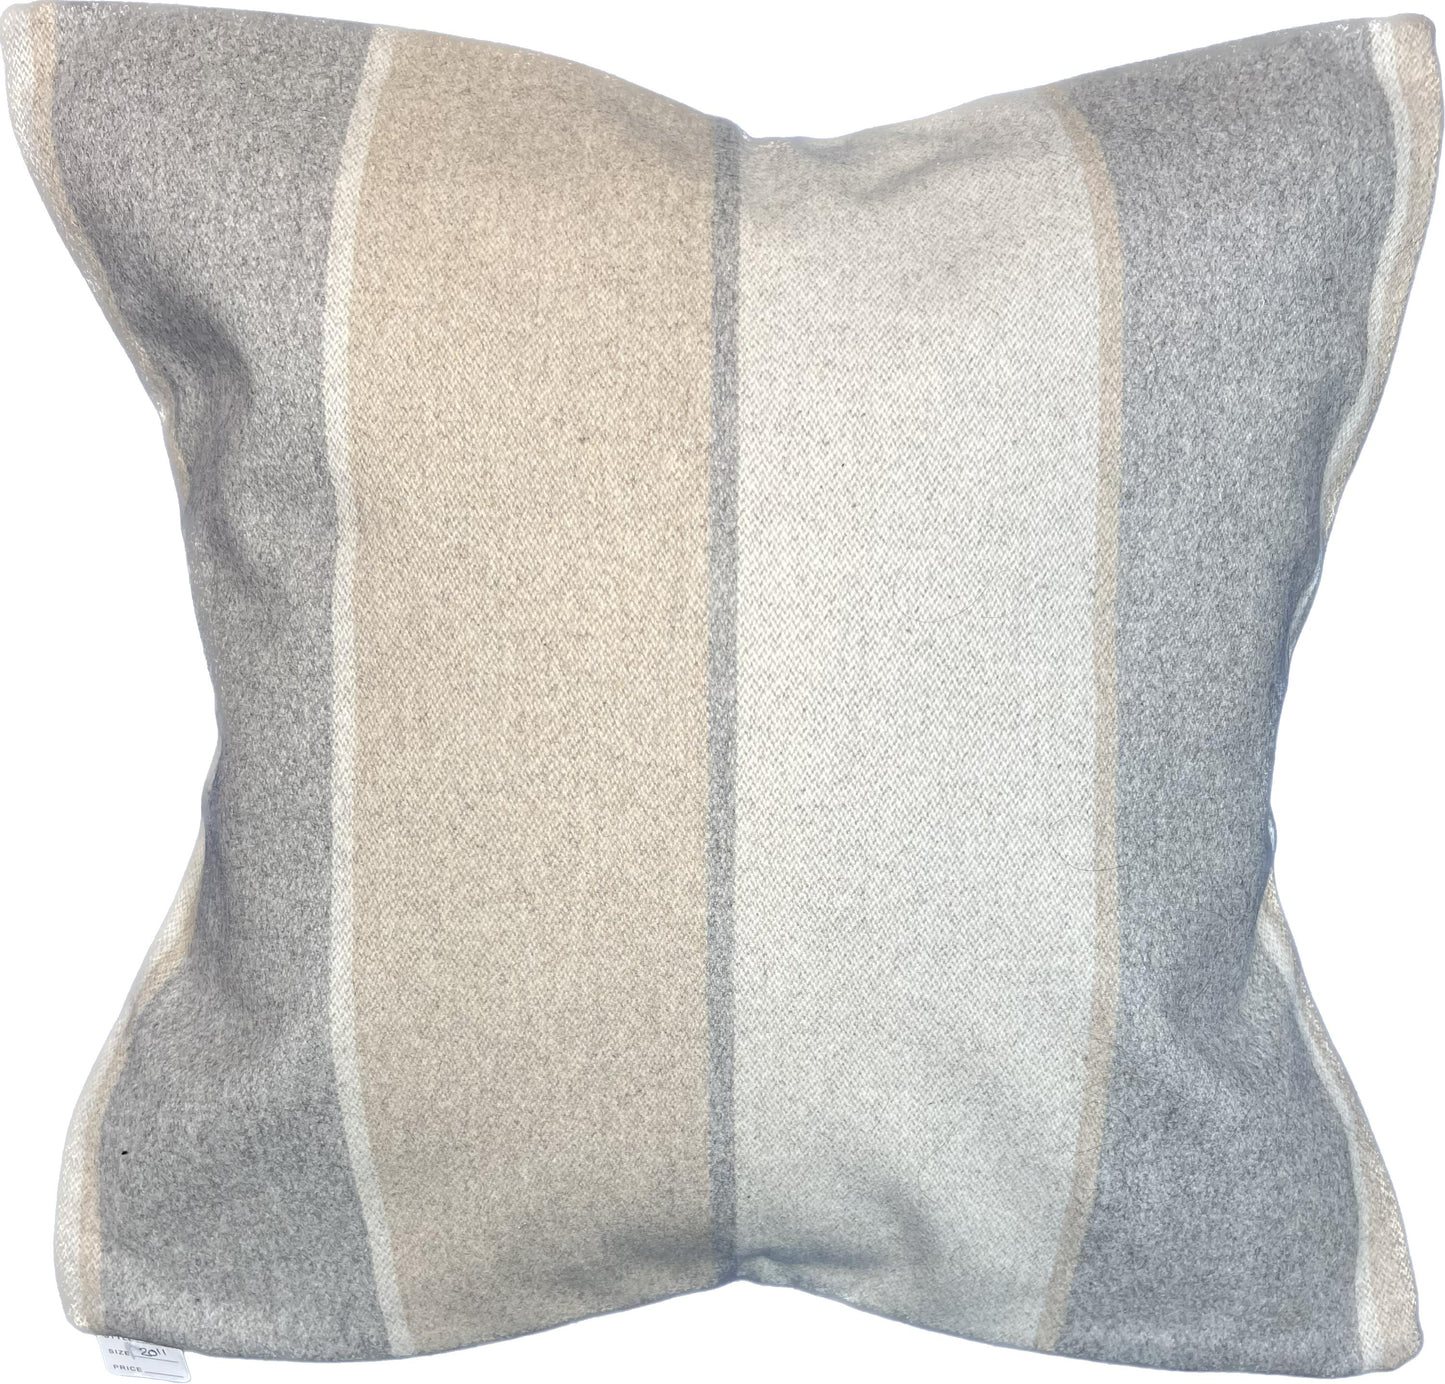 20"x20" Wool Stripe Pillow Cover